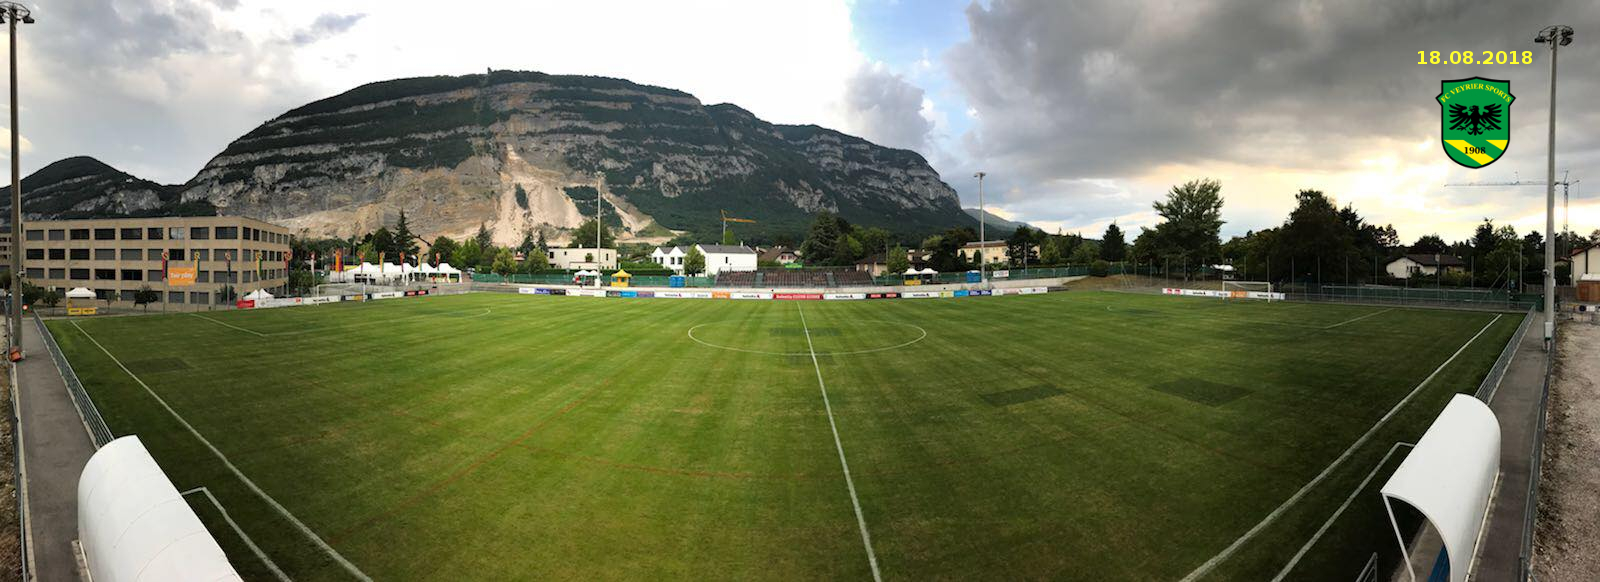 Stade Veyrier-Village